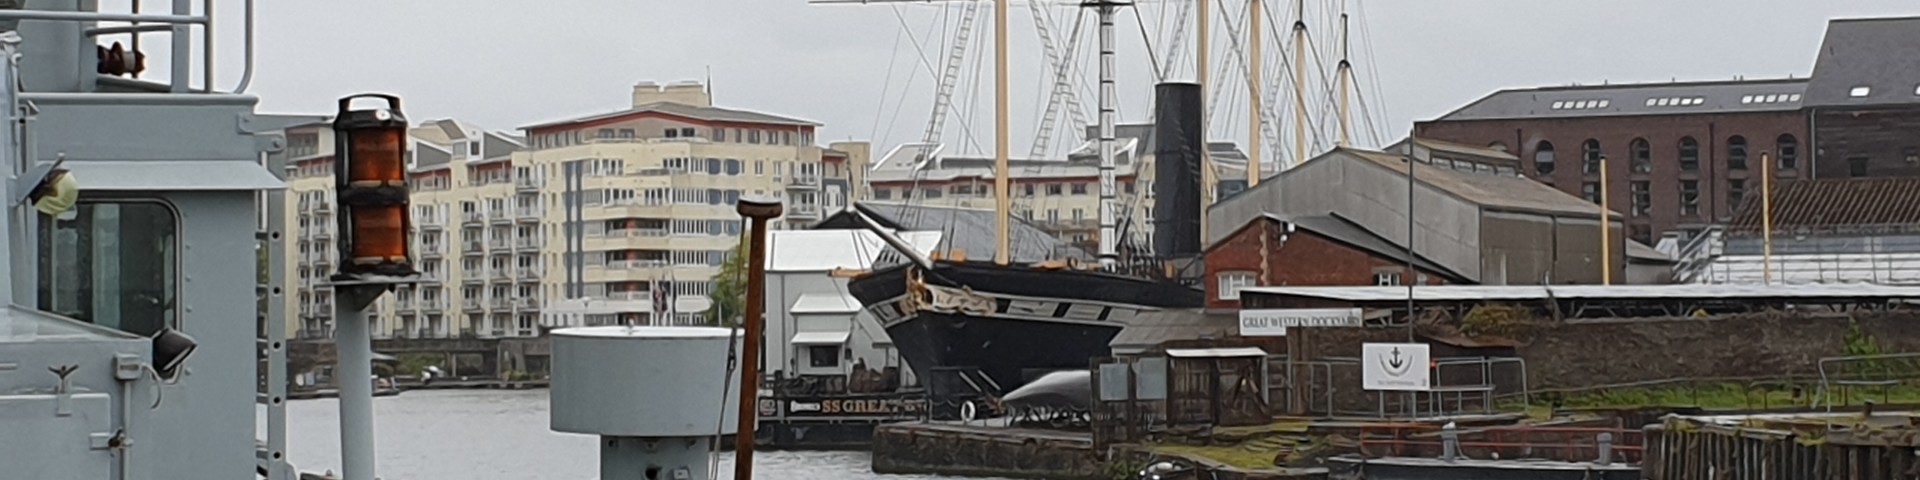 SS Great Britain, Bristol Docks